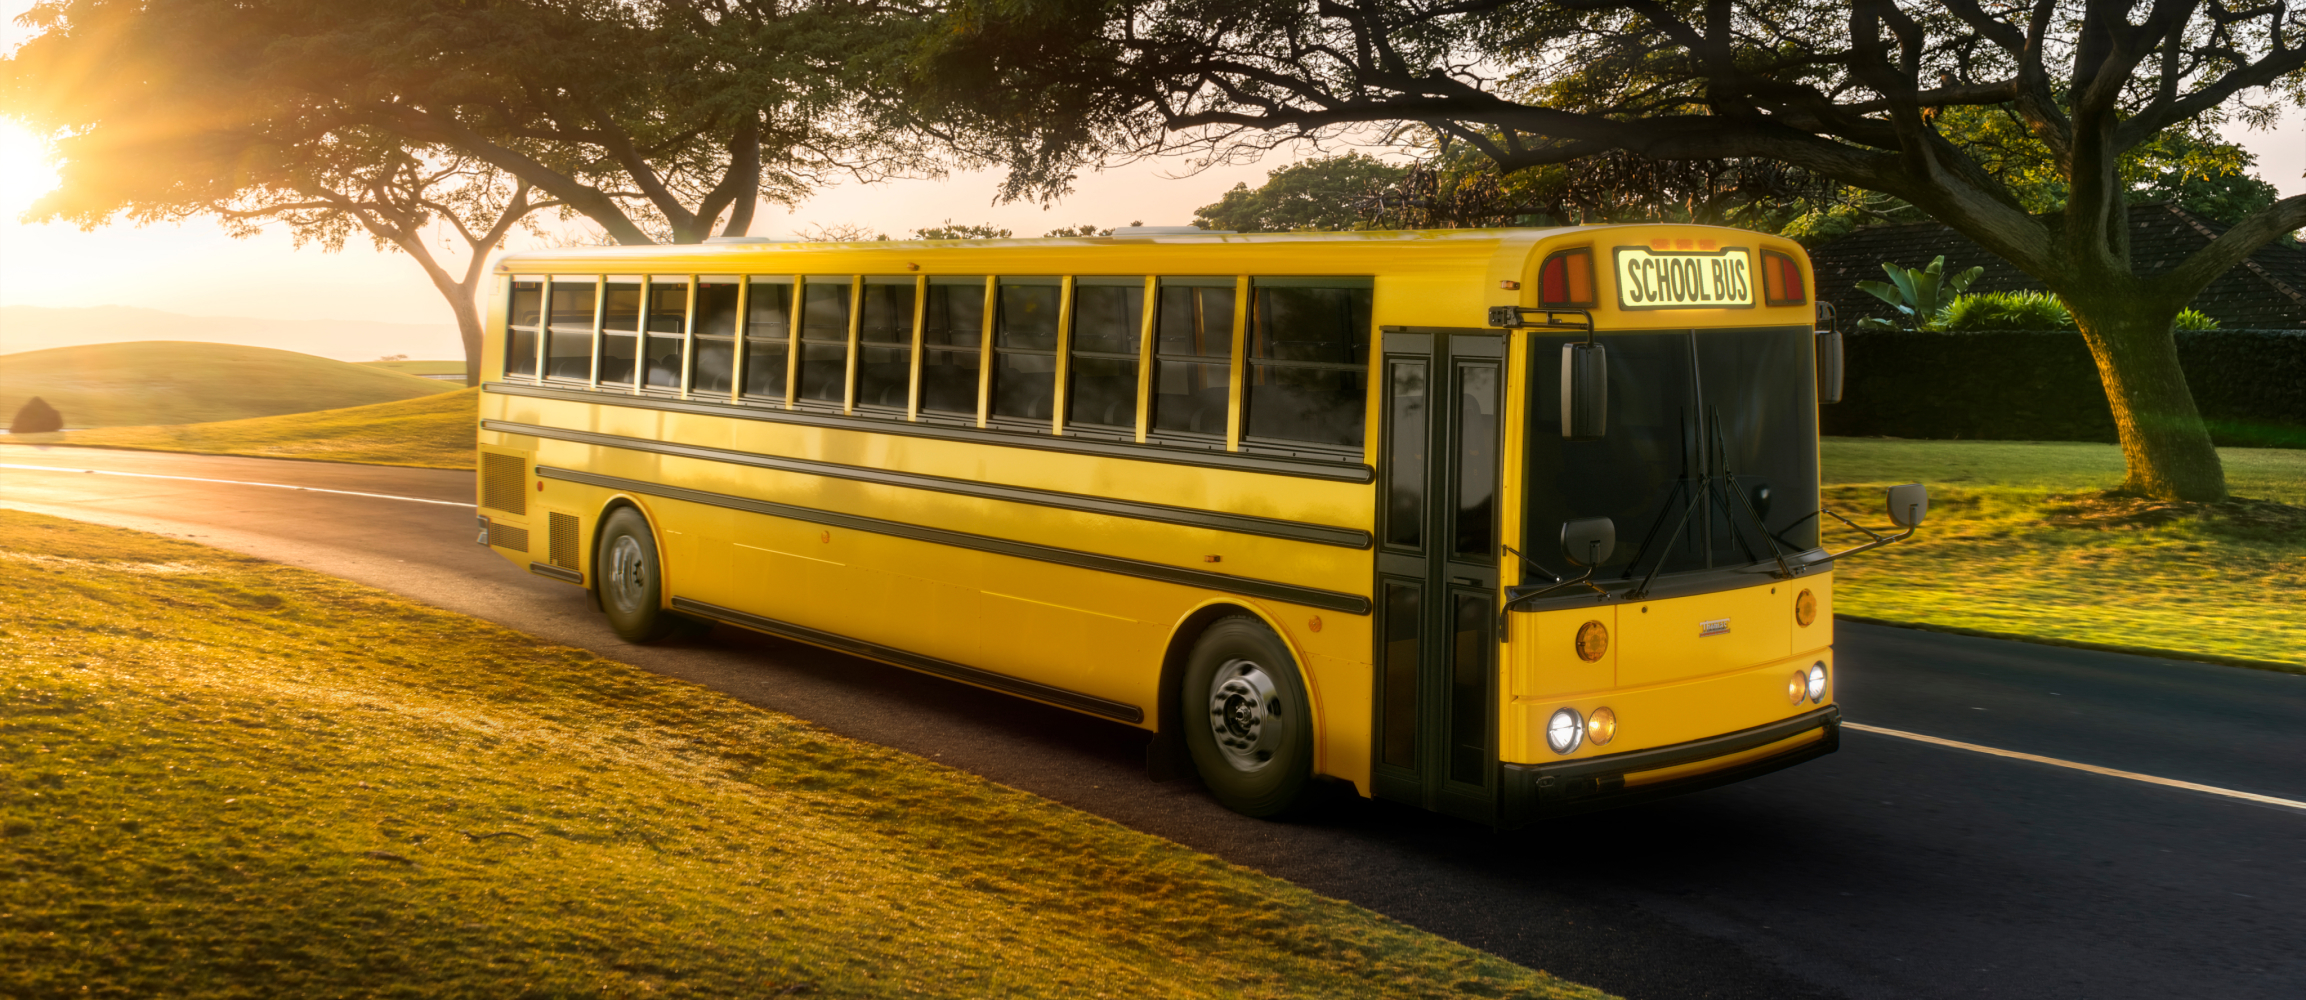 Thomas Saf t liner c2 School Bus - buswest.jpg